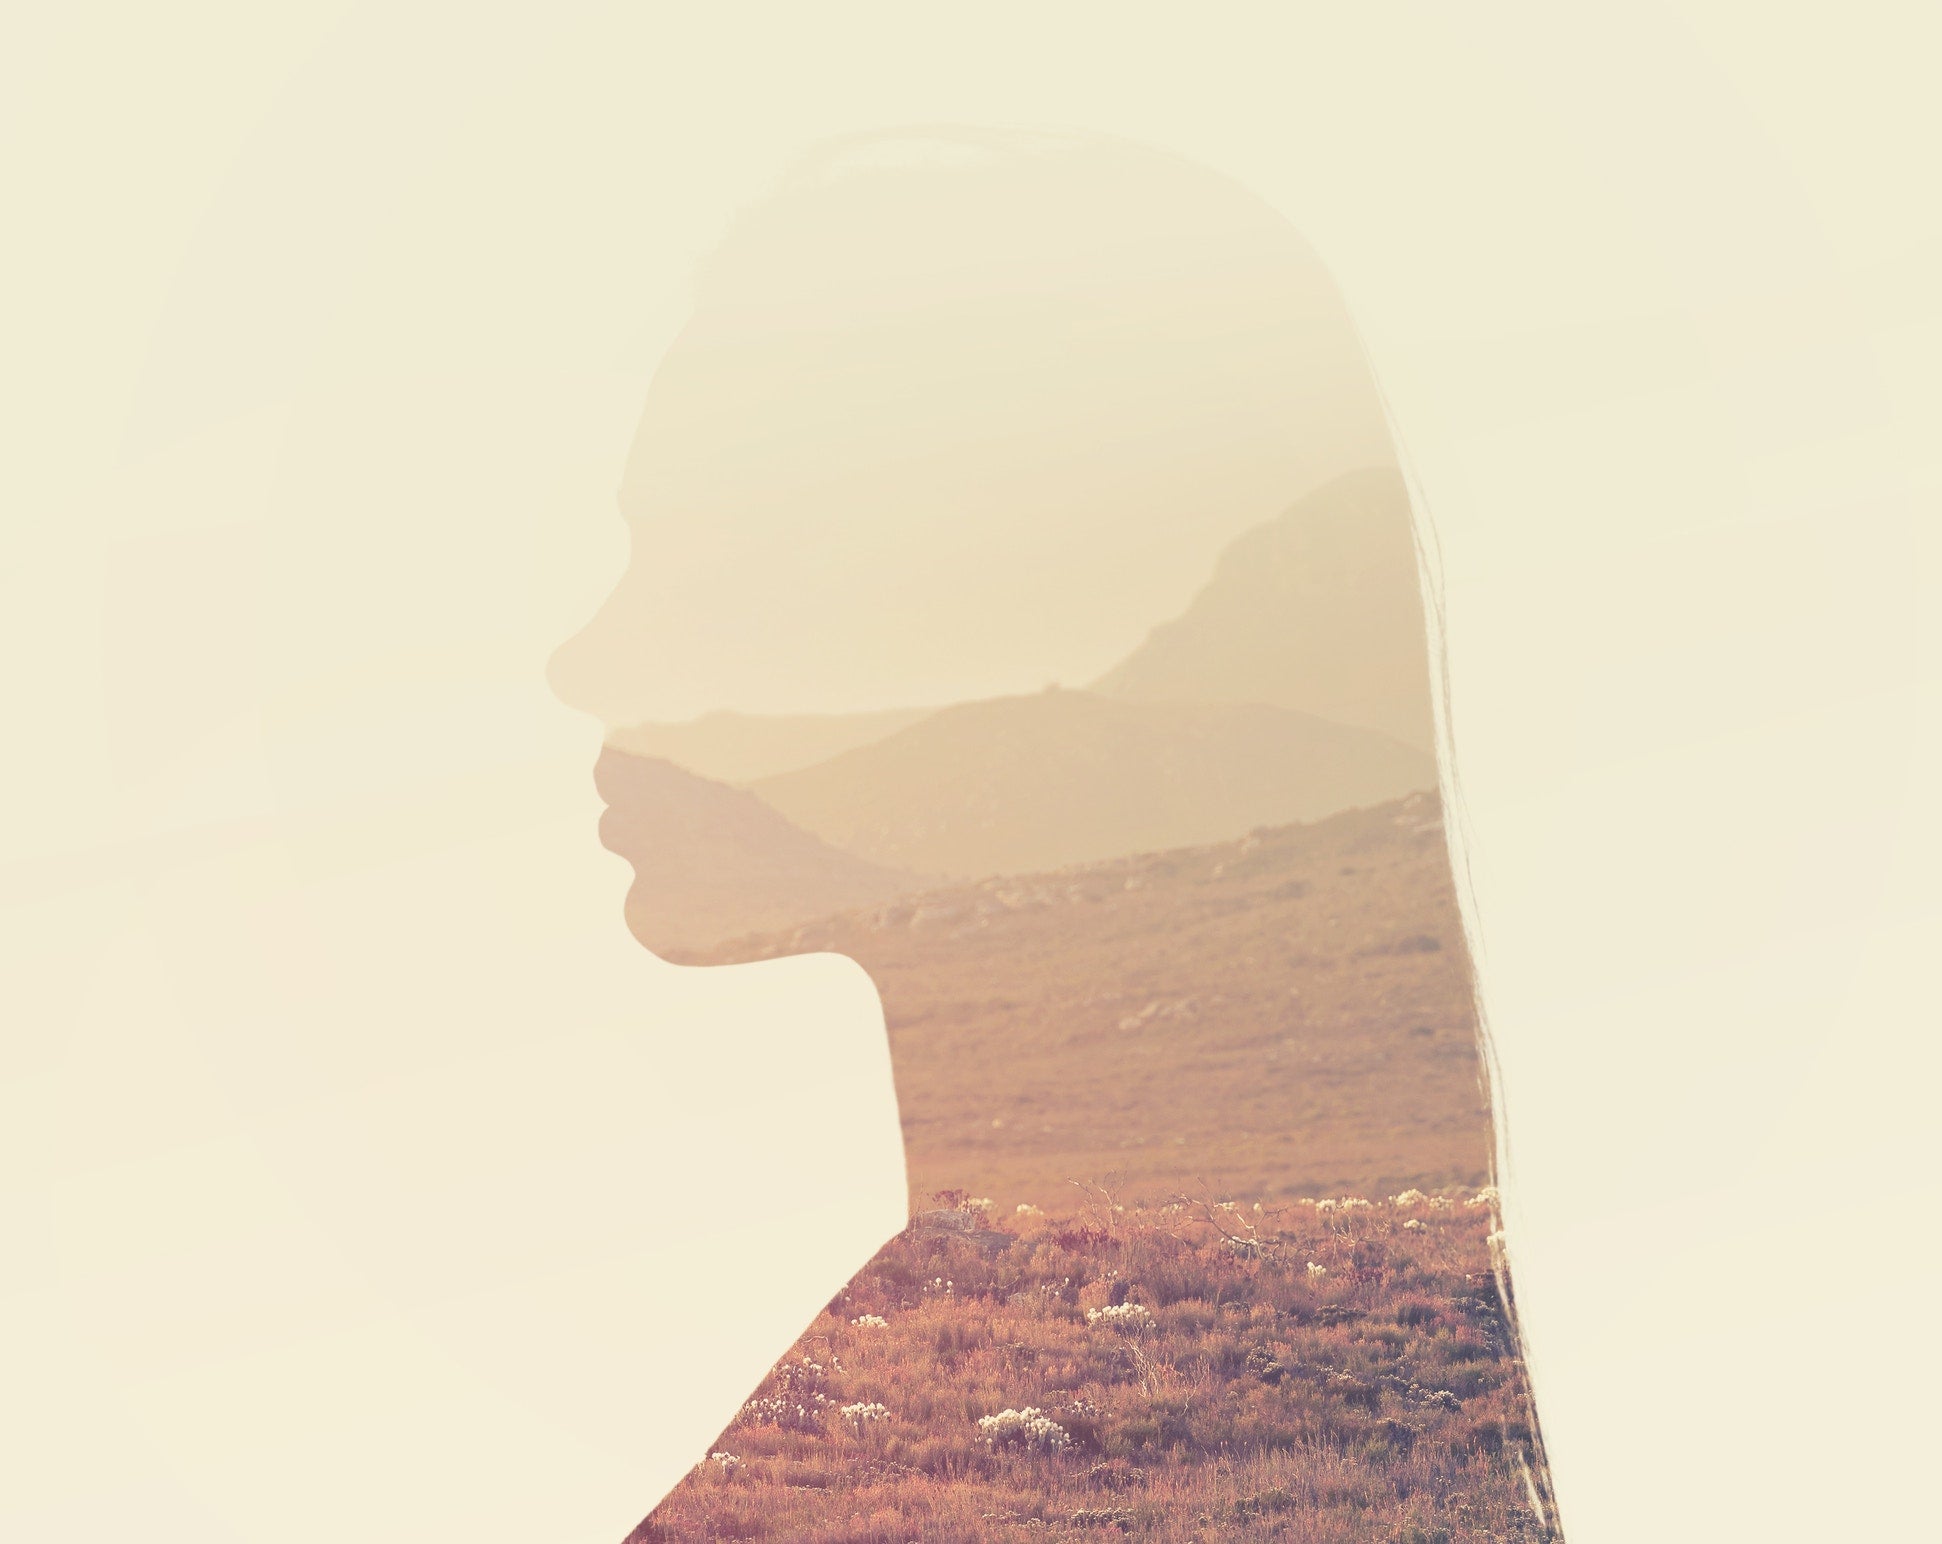 Silhouette of woman's head